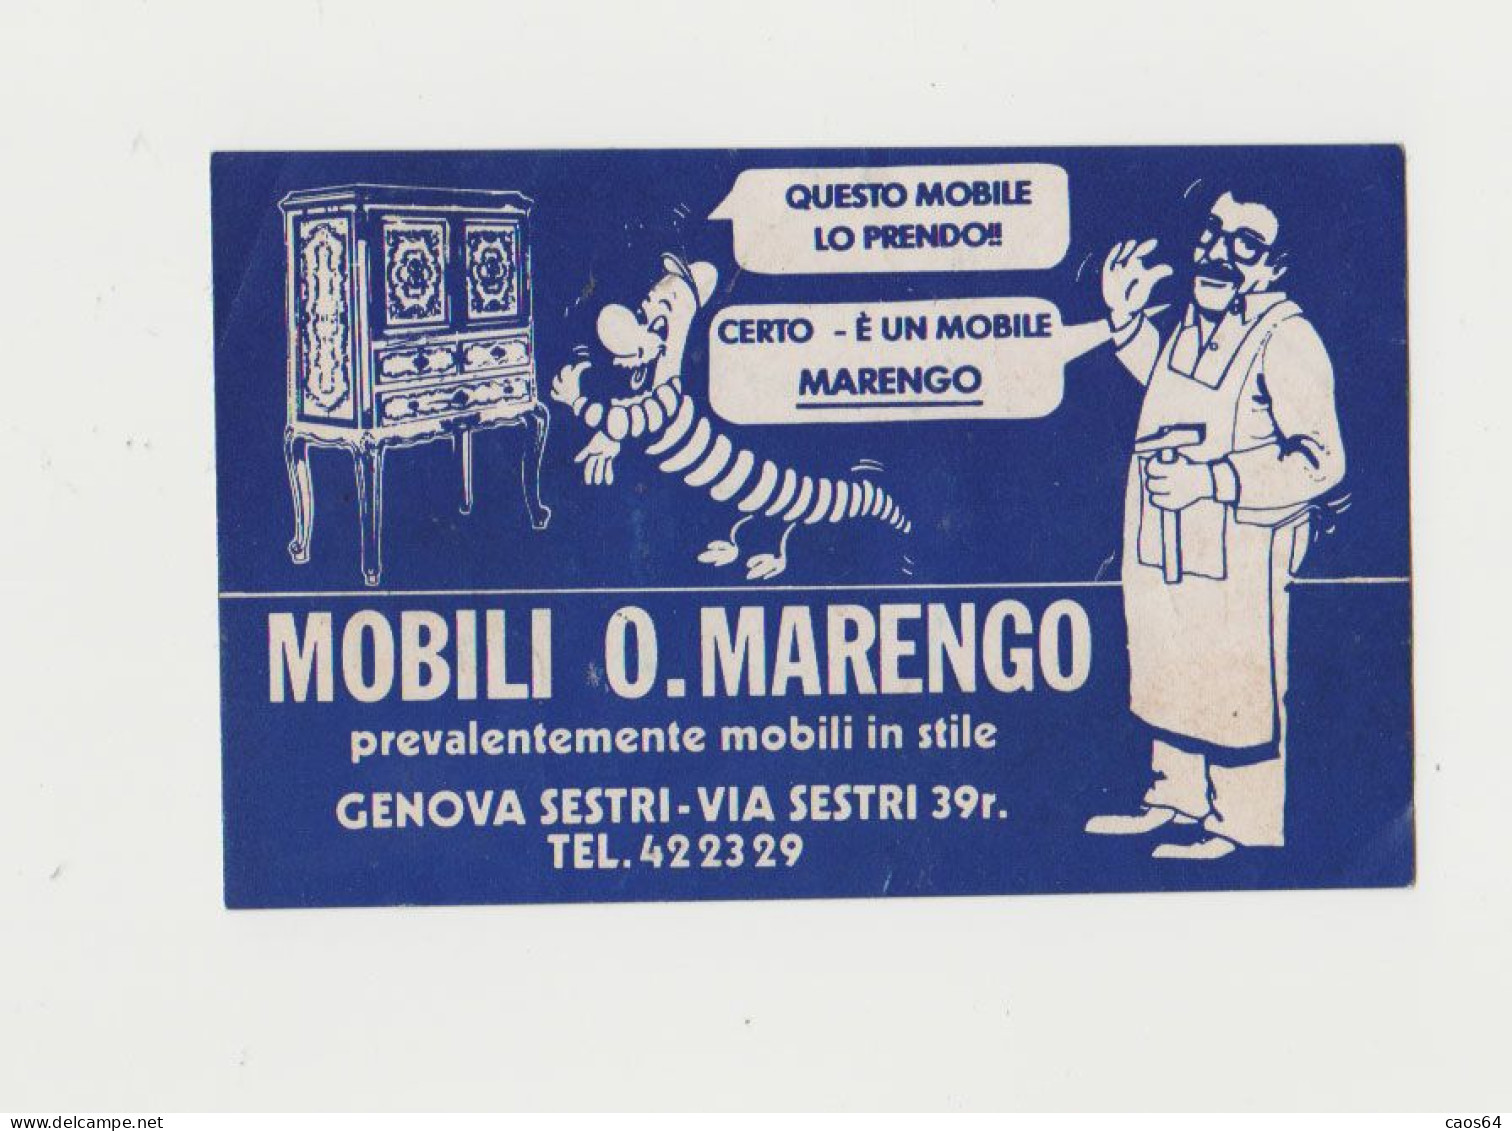 Mobili Marengo Genova  12 X 7,5 Cm   ADESIVO STICKER  NEW ORIGINAL - Stickers